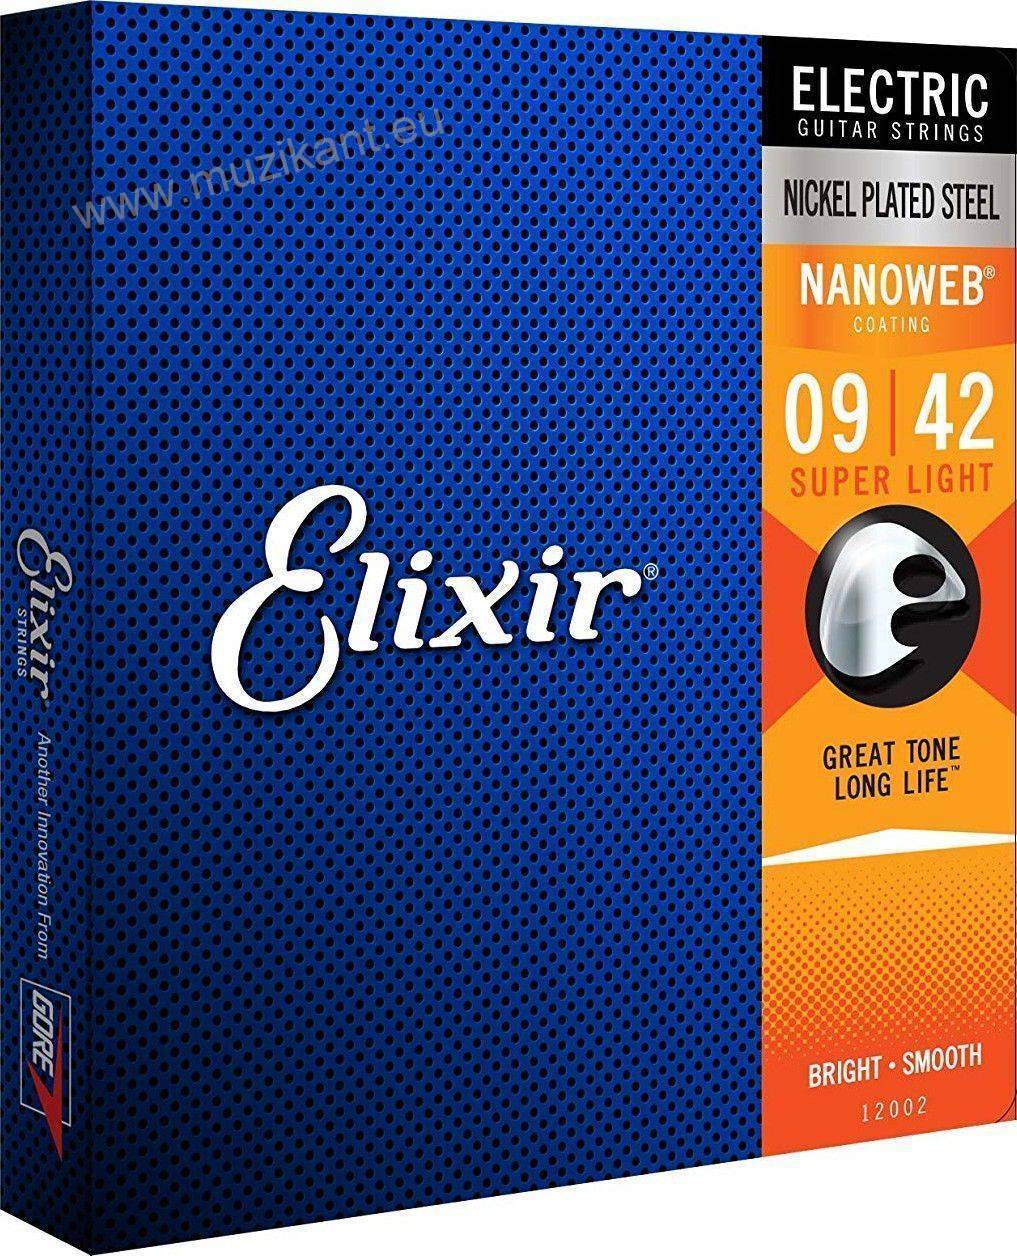 Elixir Electric NANOWEB 12002  09/42 Super Light